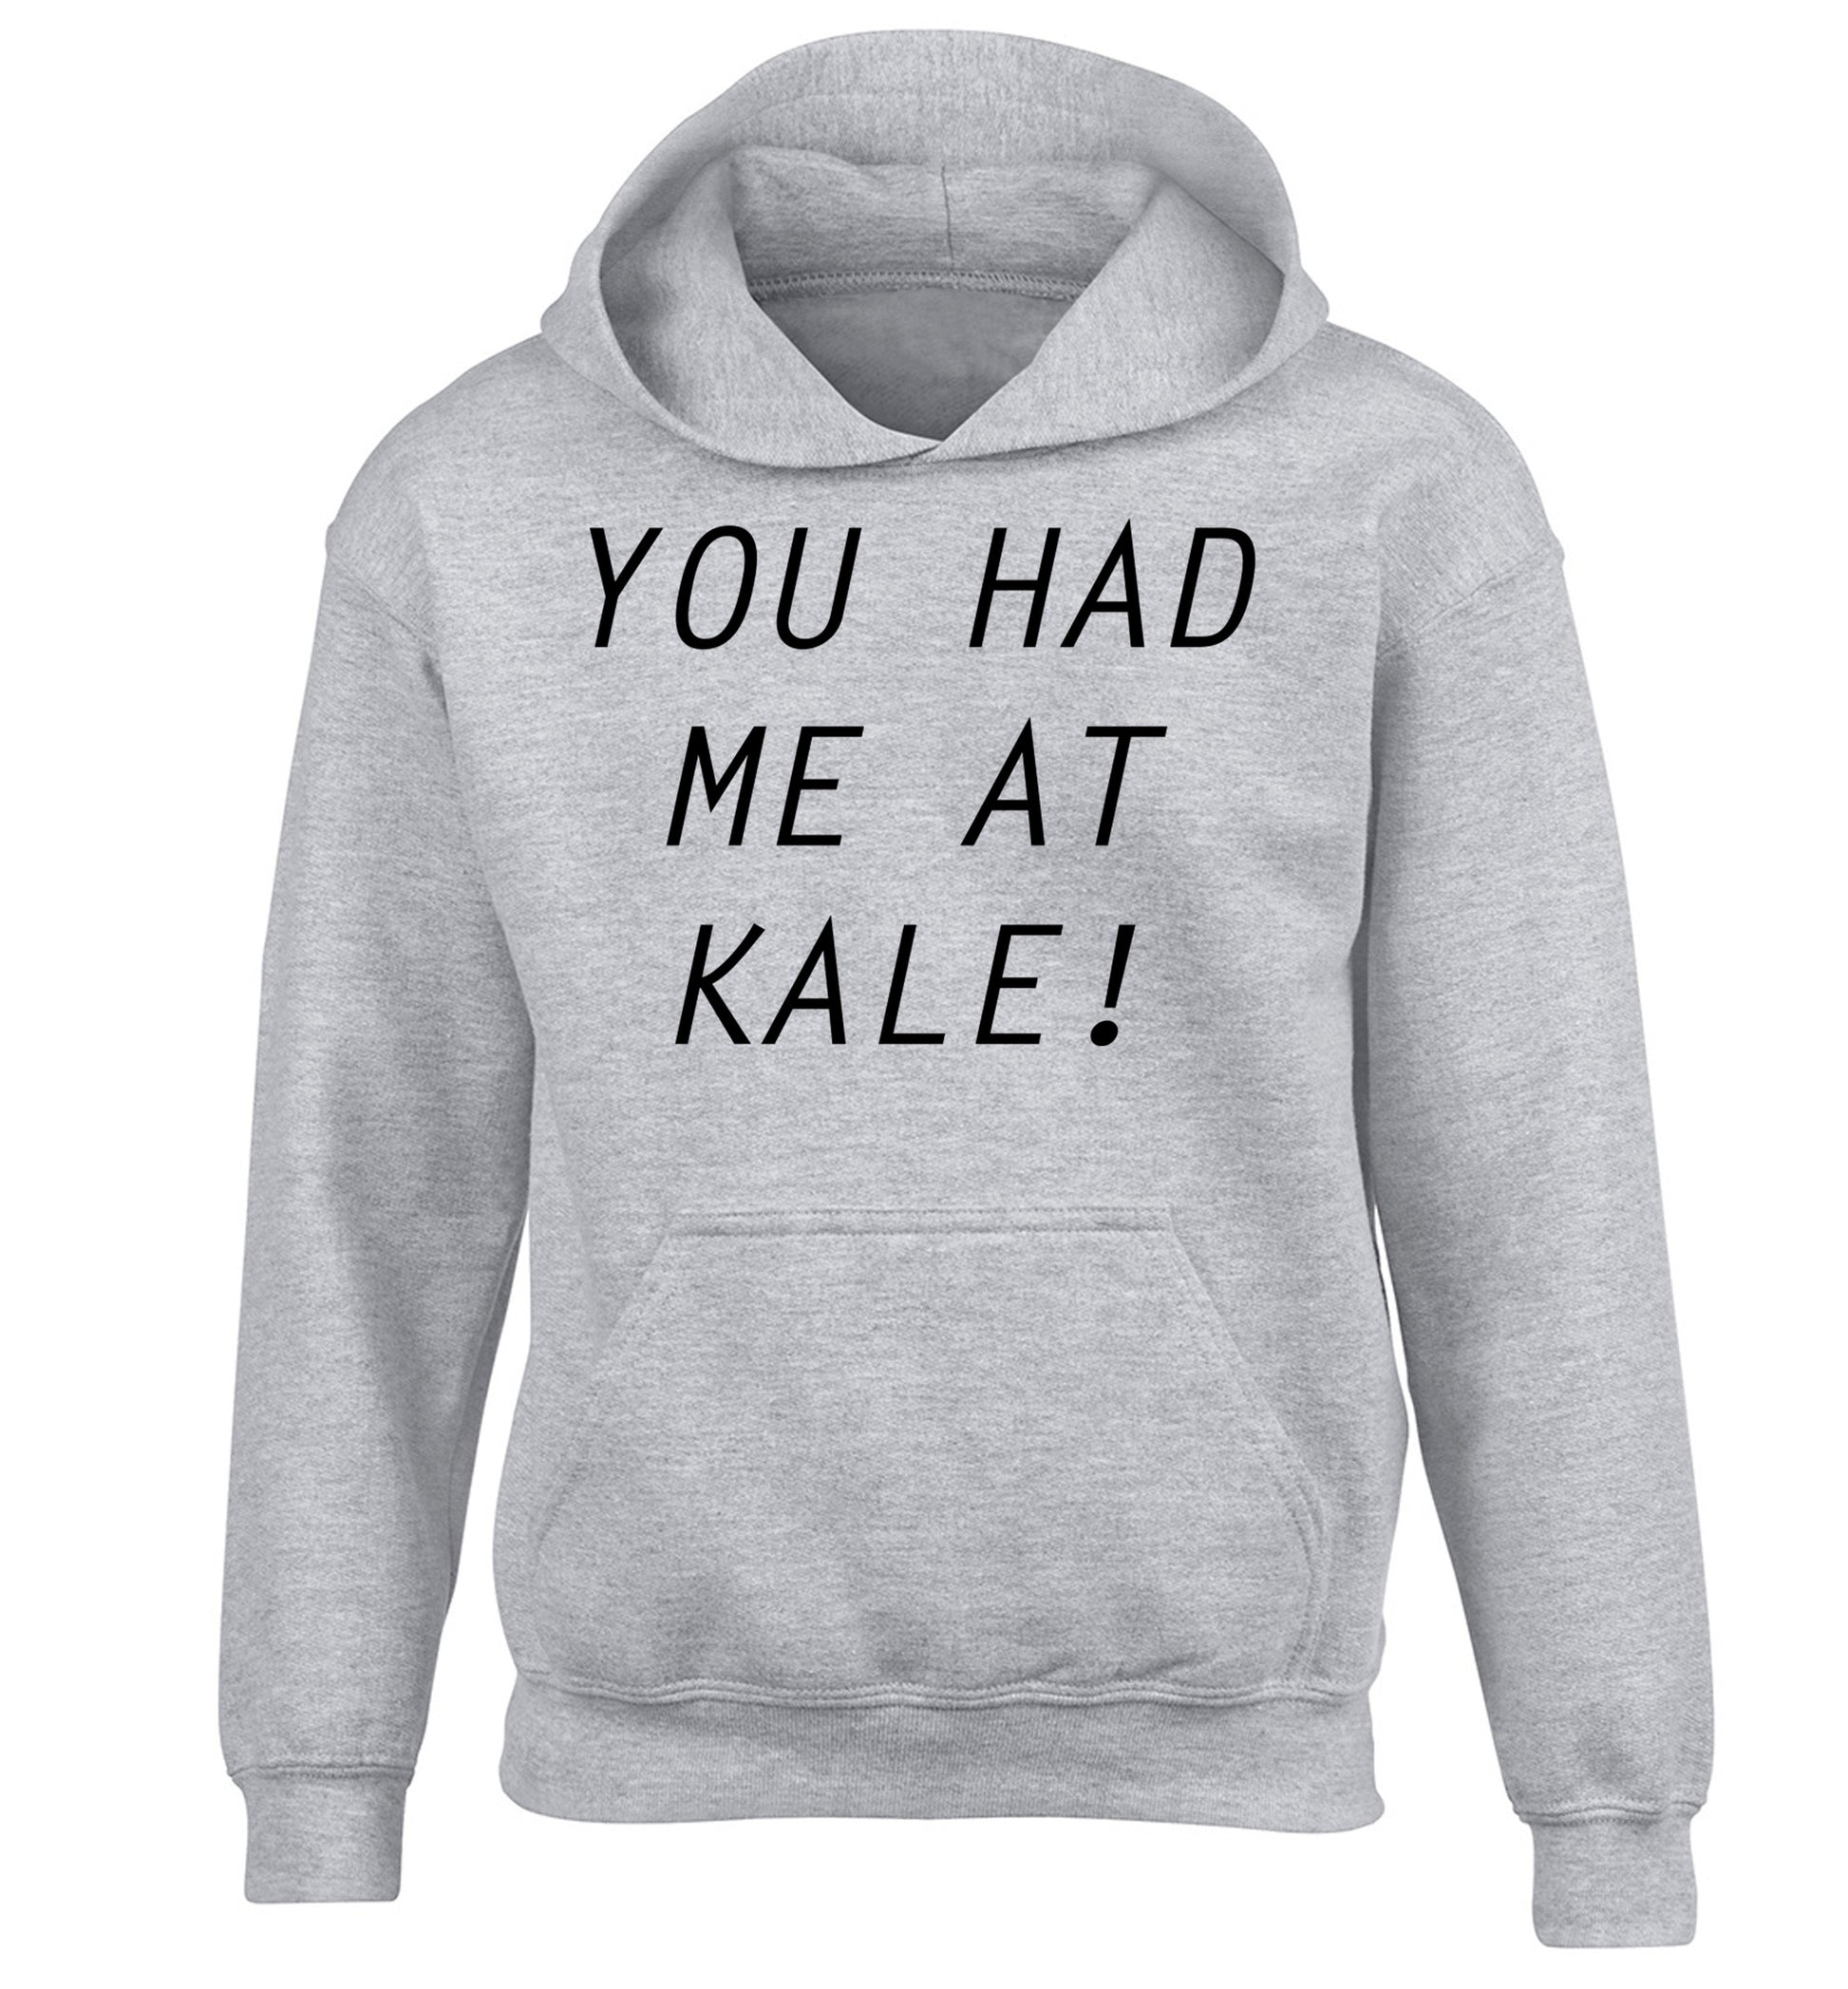 You had me at kale children's grey hoodie 12-14 Years